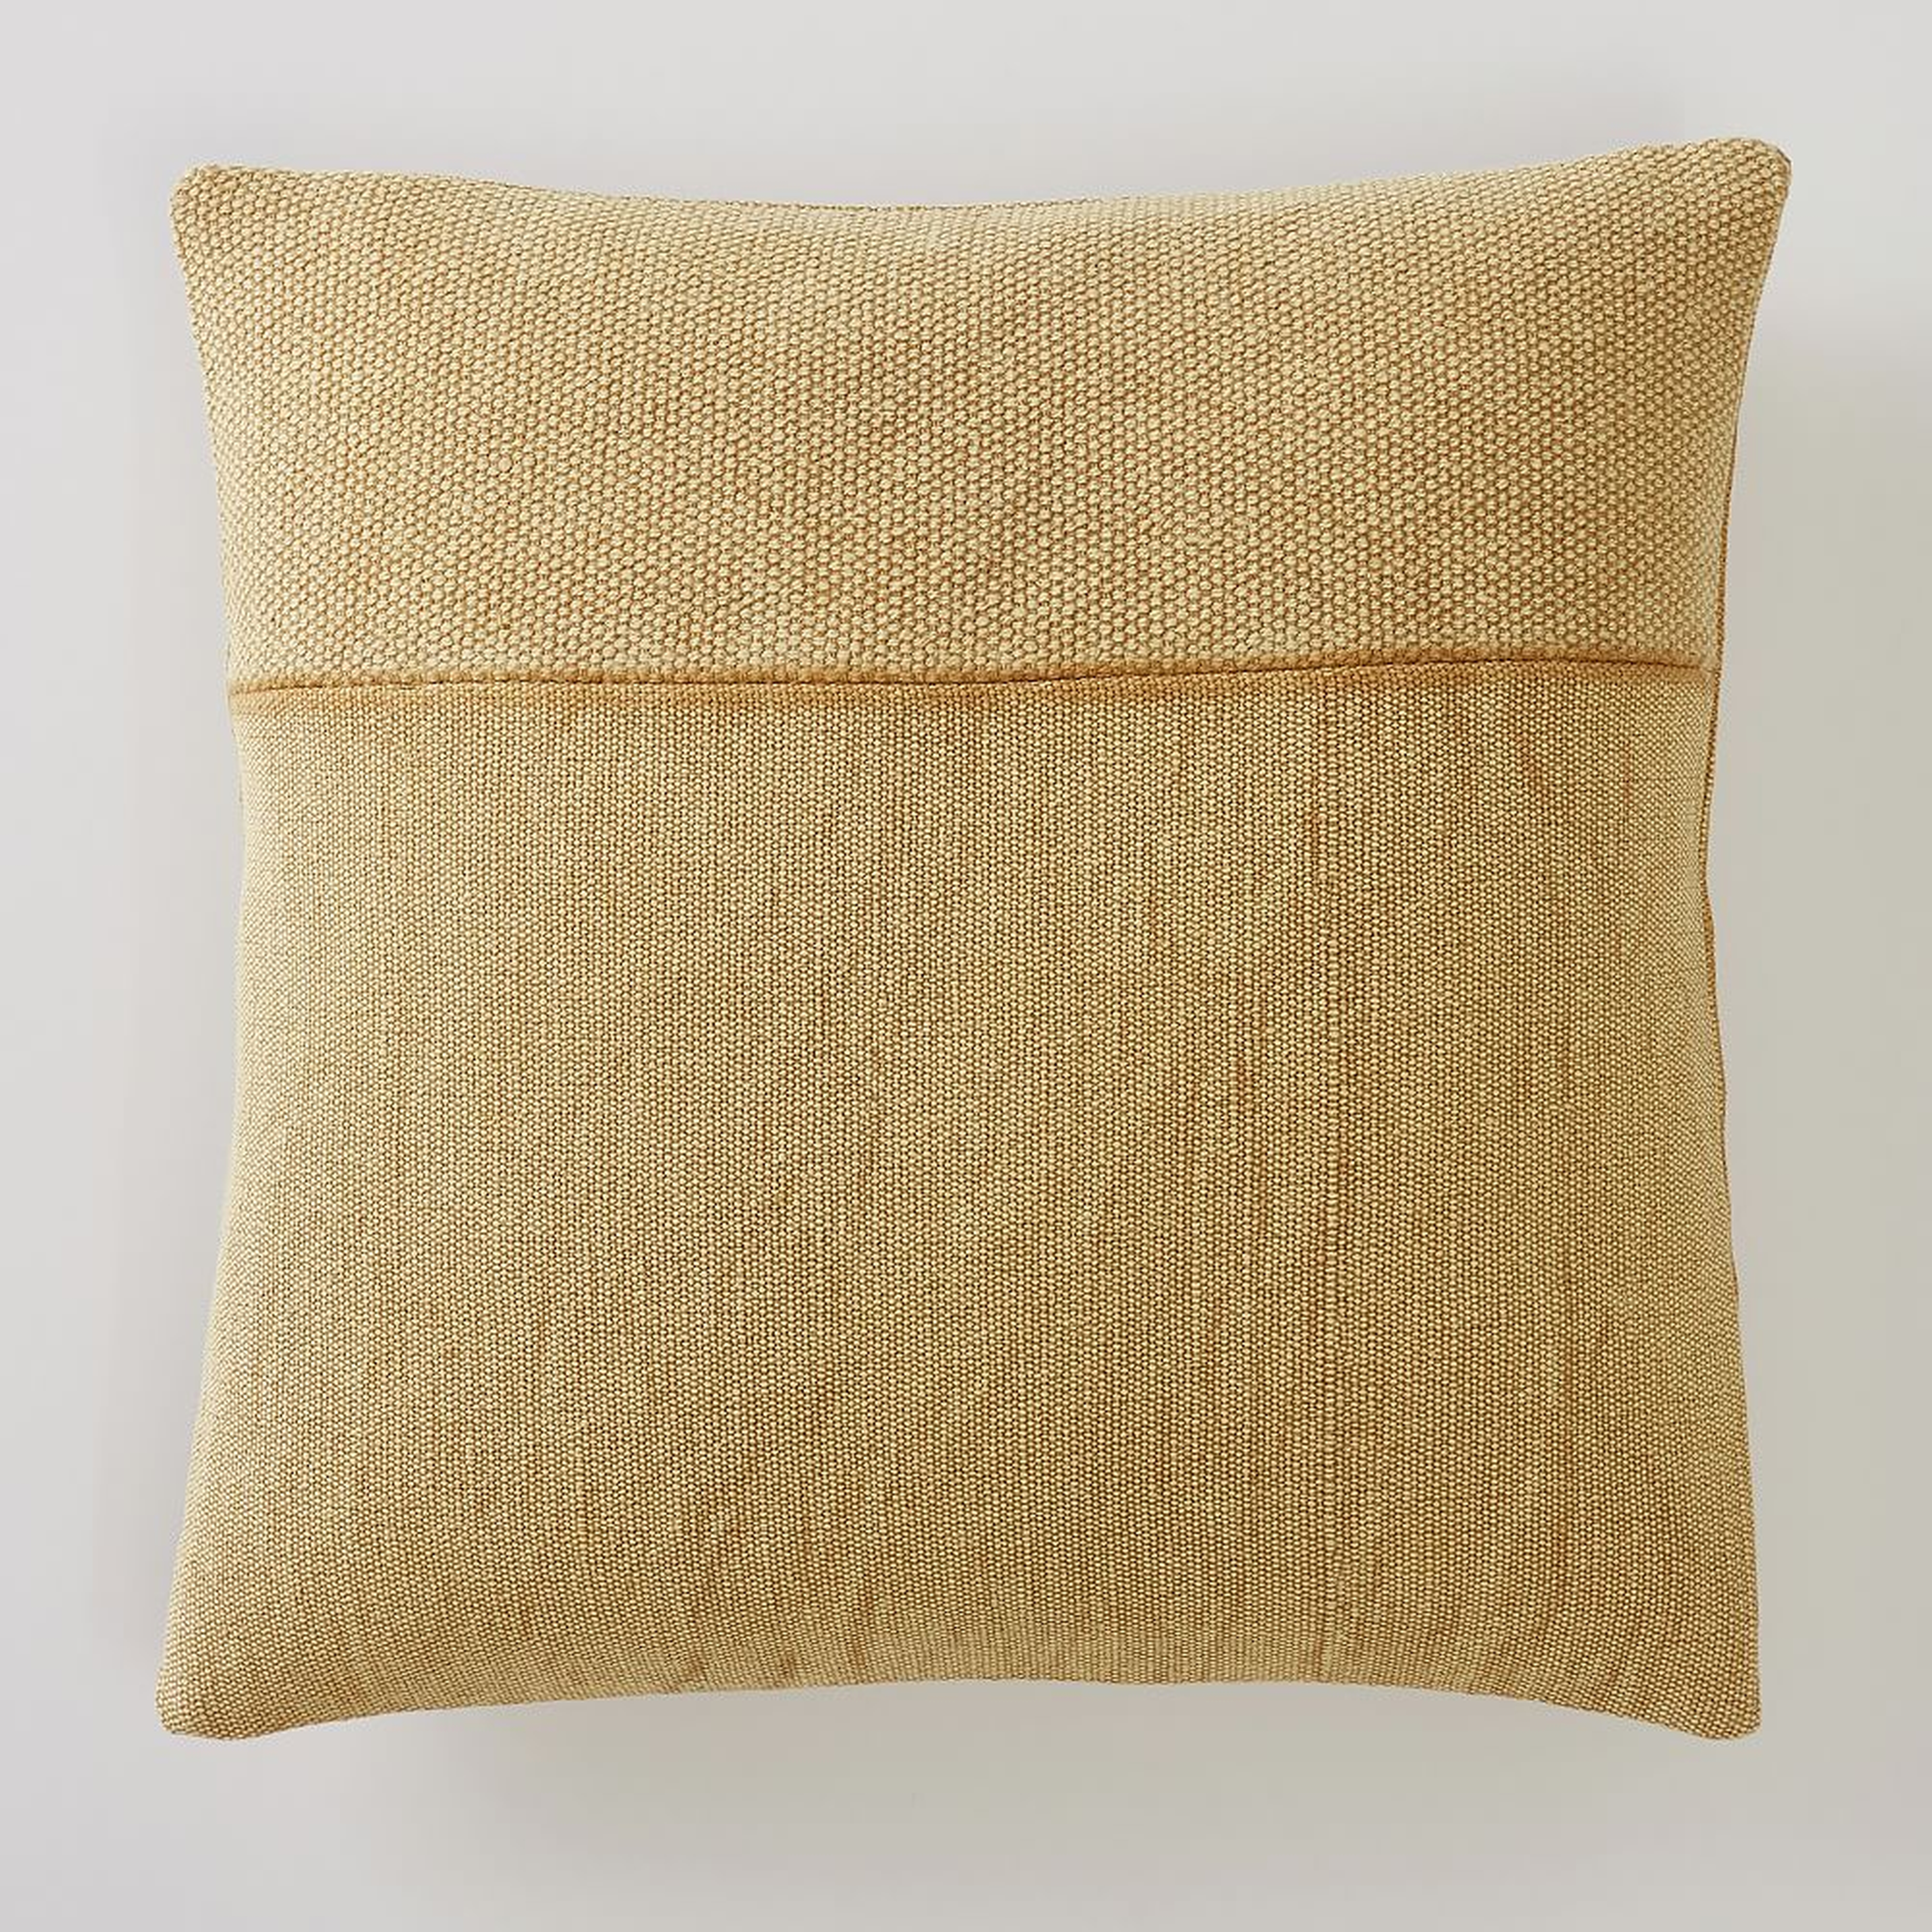 WE Cotton Canvas Pillow Cover & Insert, Horseradish, 18" x 18" - Pottery Barn Teen